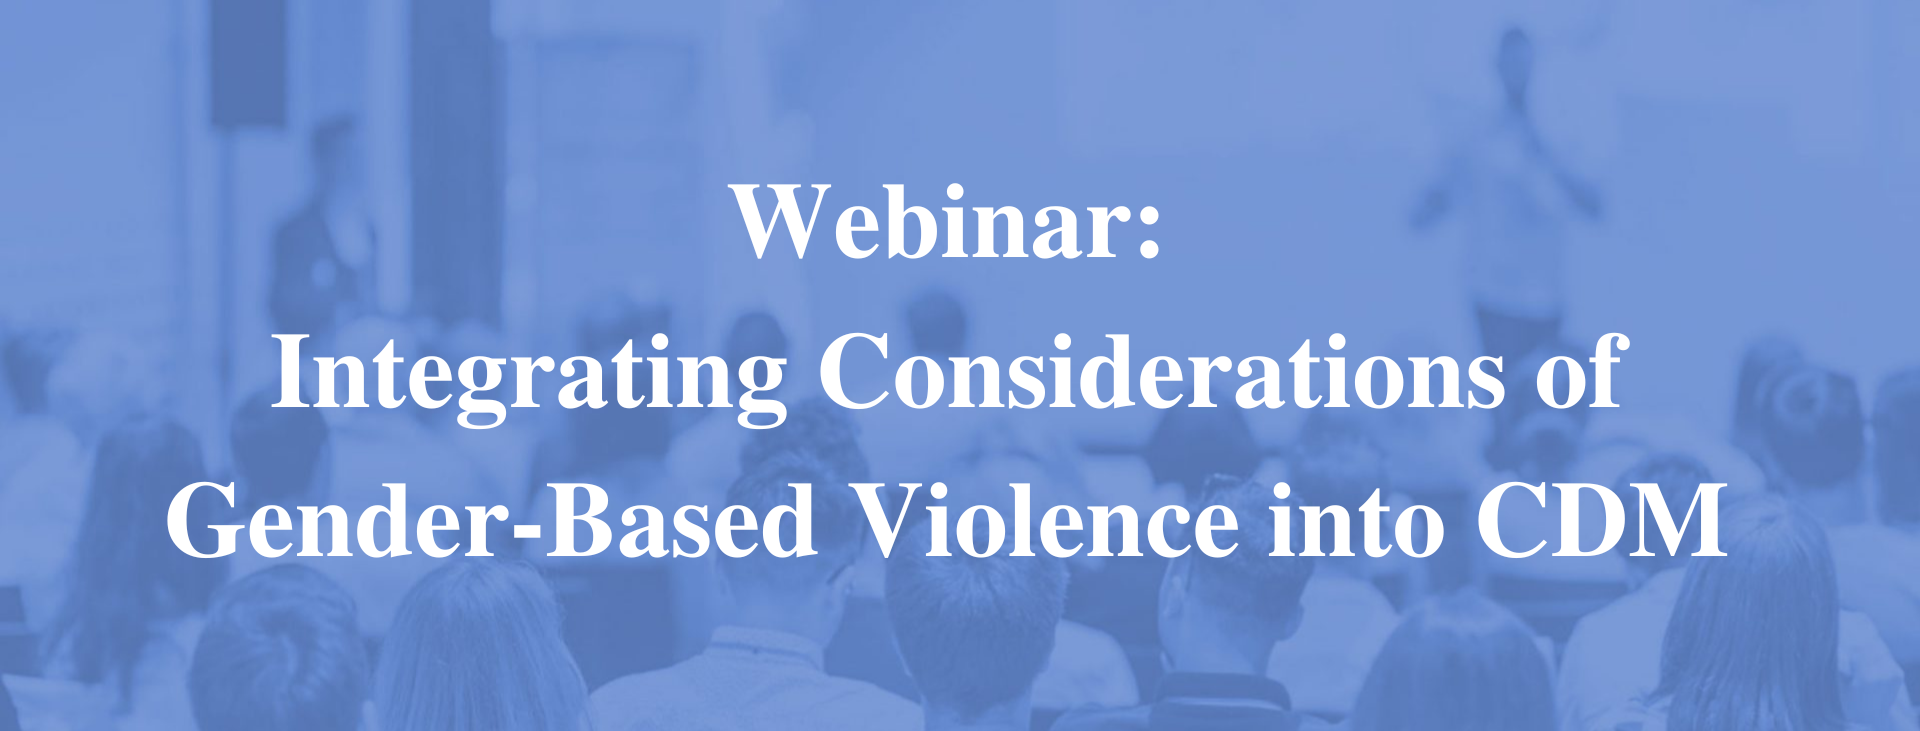 Webinar on Integrating Considerations of Gender-Based Violence into CDM